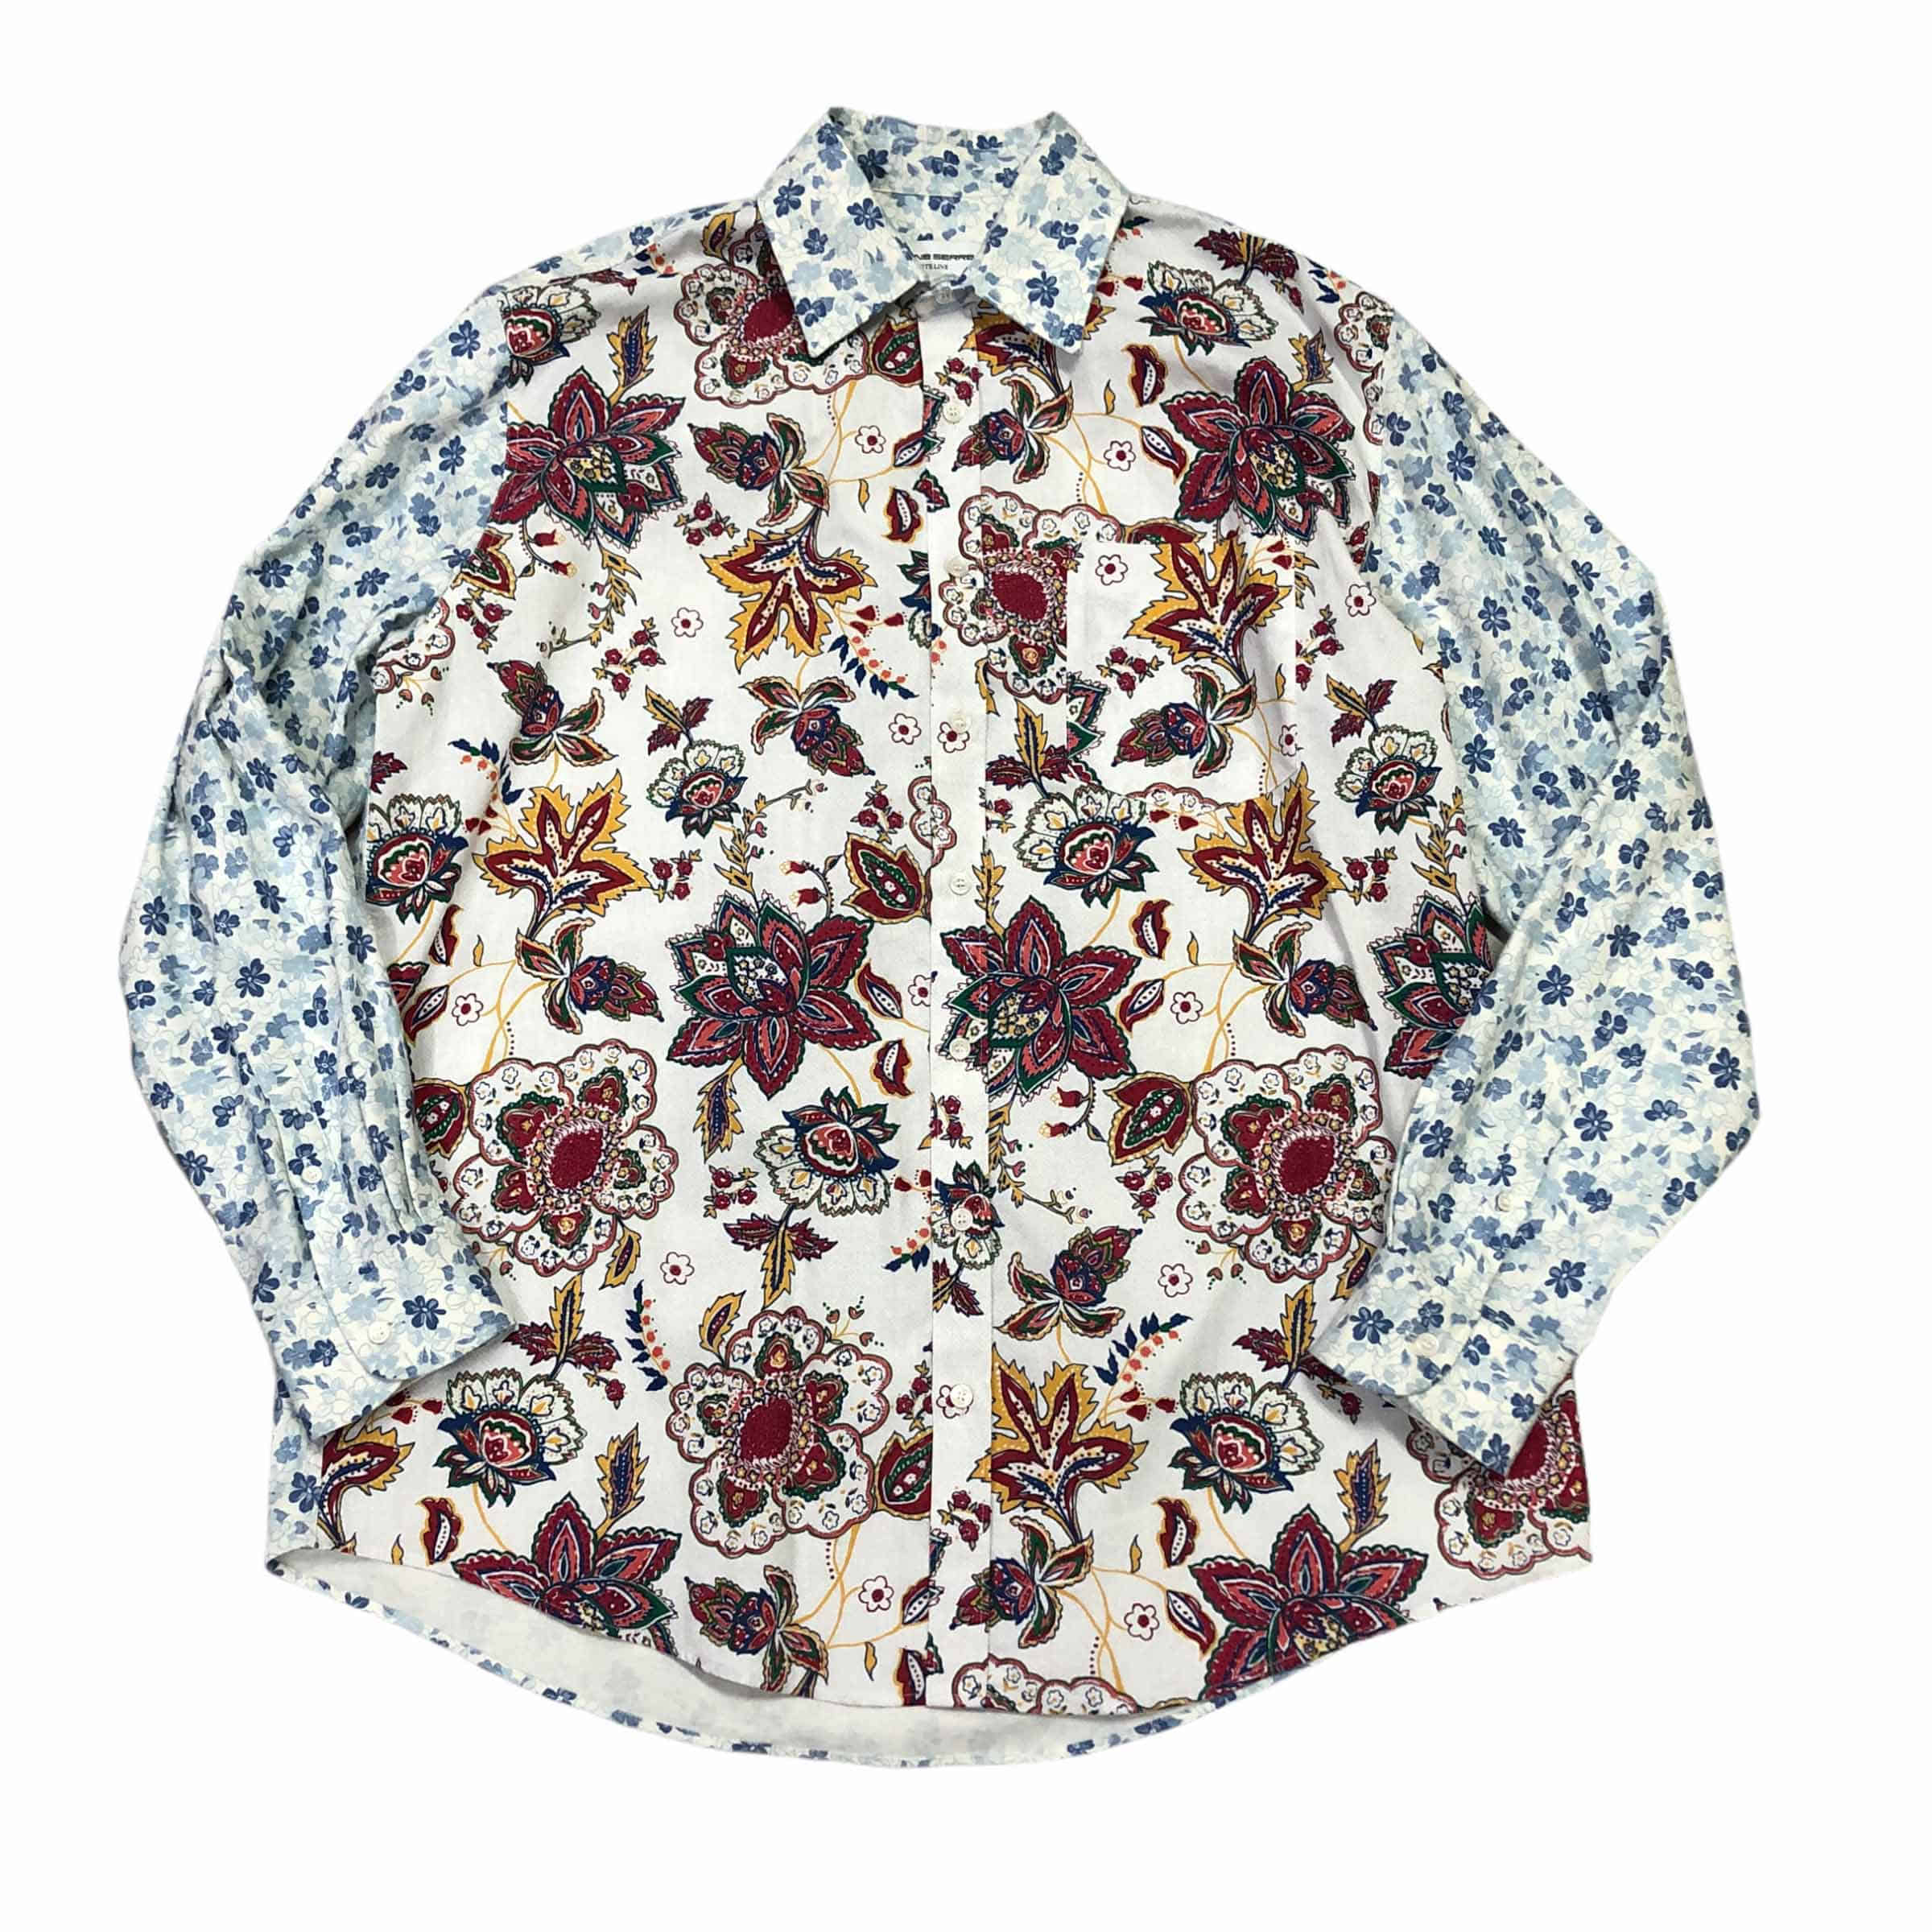 [Marine Serre] Regenerated Floral-Print Shirt - Size M